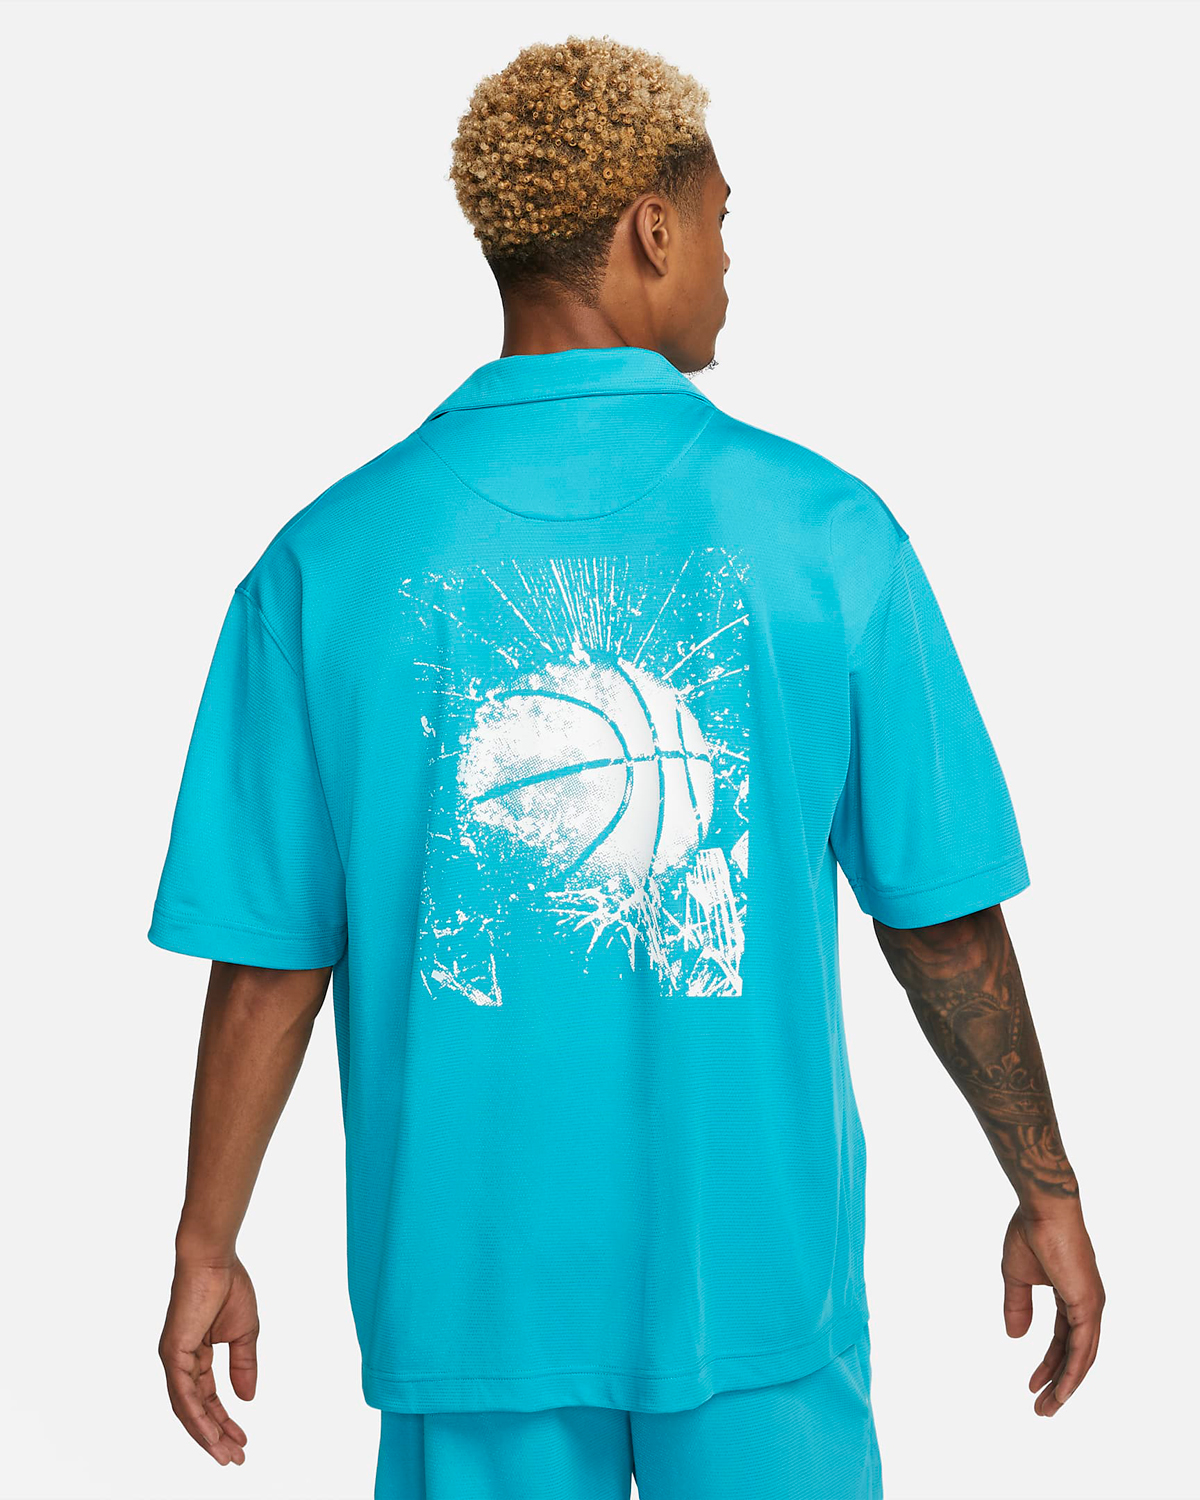 Nike-Short-Sleeve-Basketball-Top-Teal-Nebula-2